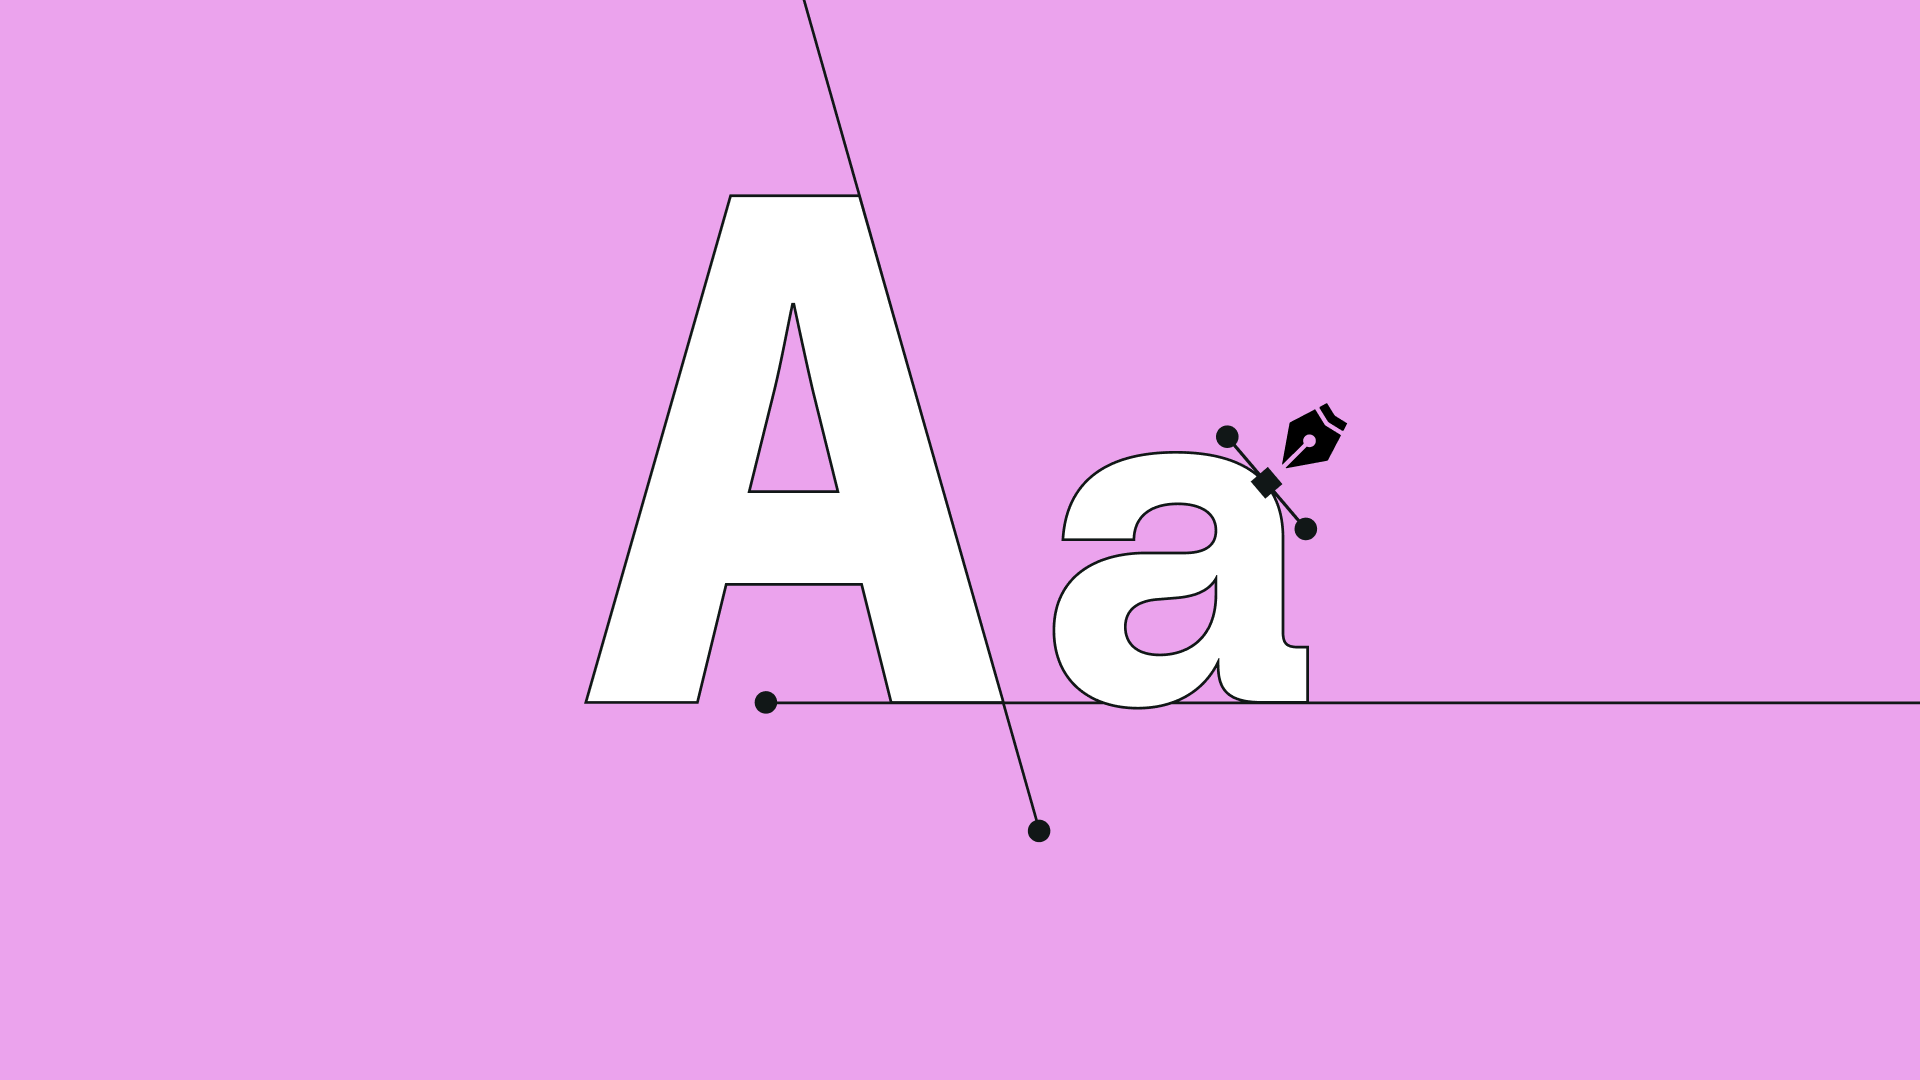 Minimal Business logo for Alphabet LV - Initial Letter L and V